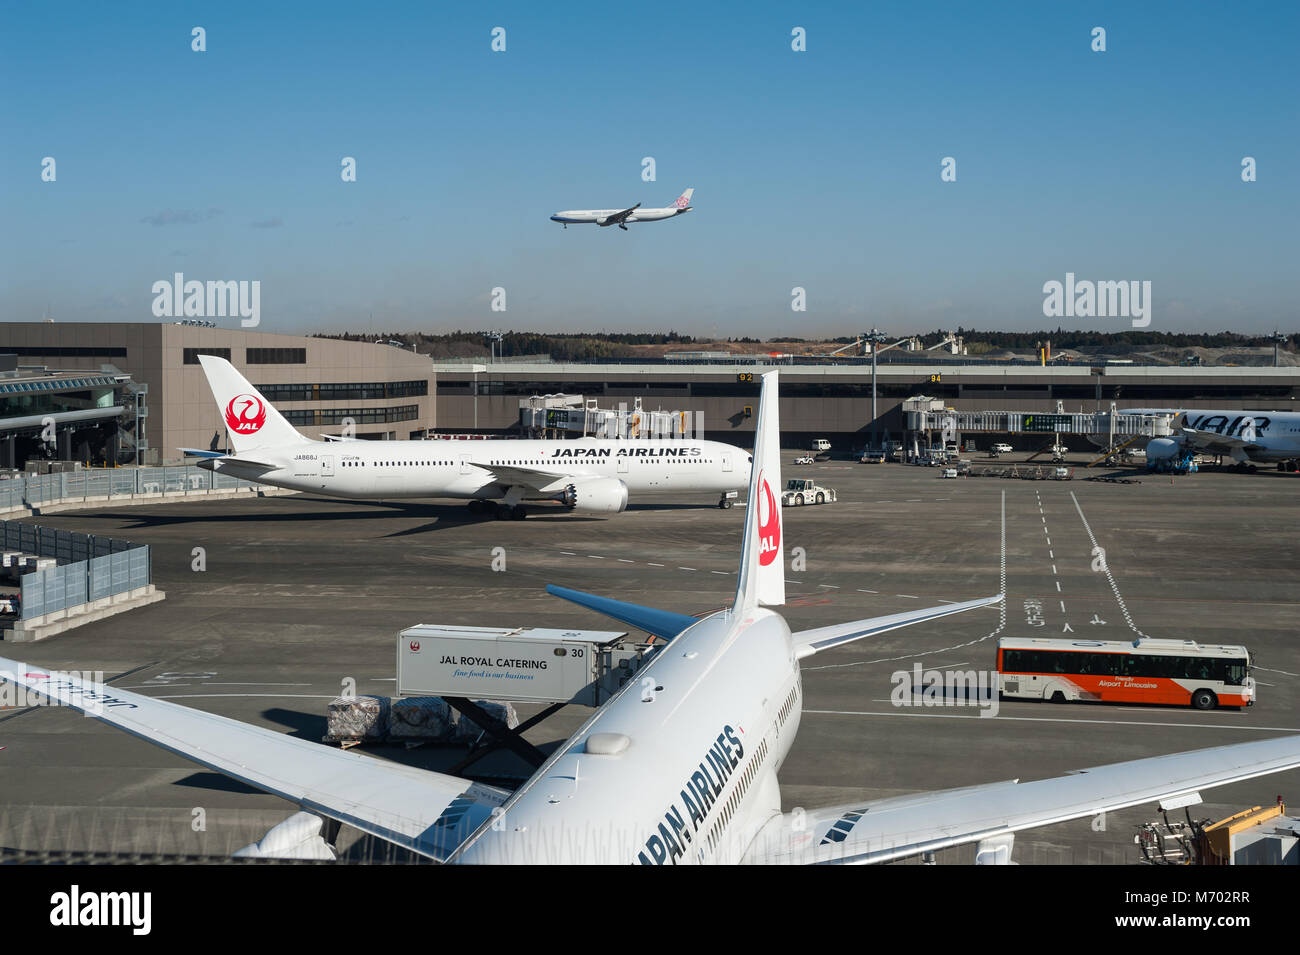 03.01.2018, Tokyo, Japan, Asia - Japan Airlines passenger planes are seen at Tokyo's International Airport Narita. Stock Photo